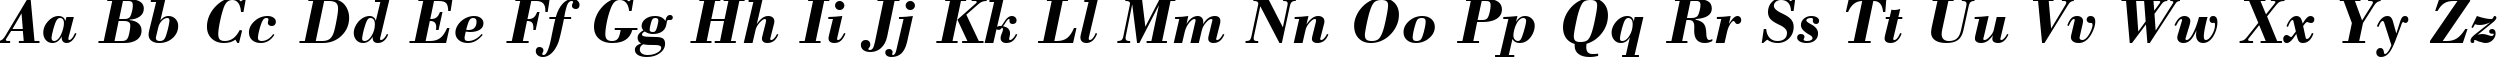 Пример написания английского алфавита шрифтом Bodoni Bold Italic BT